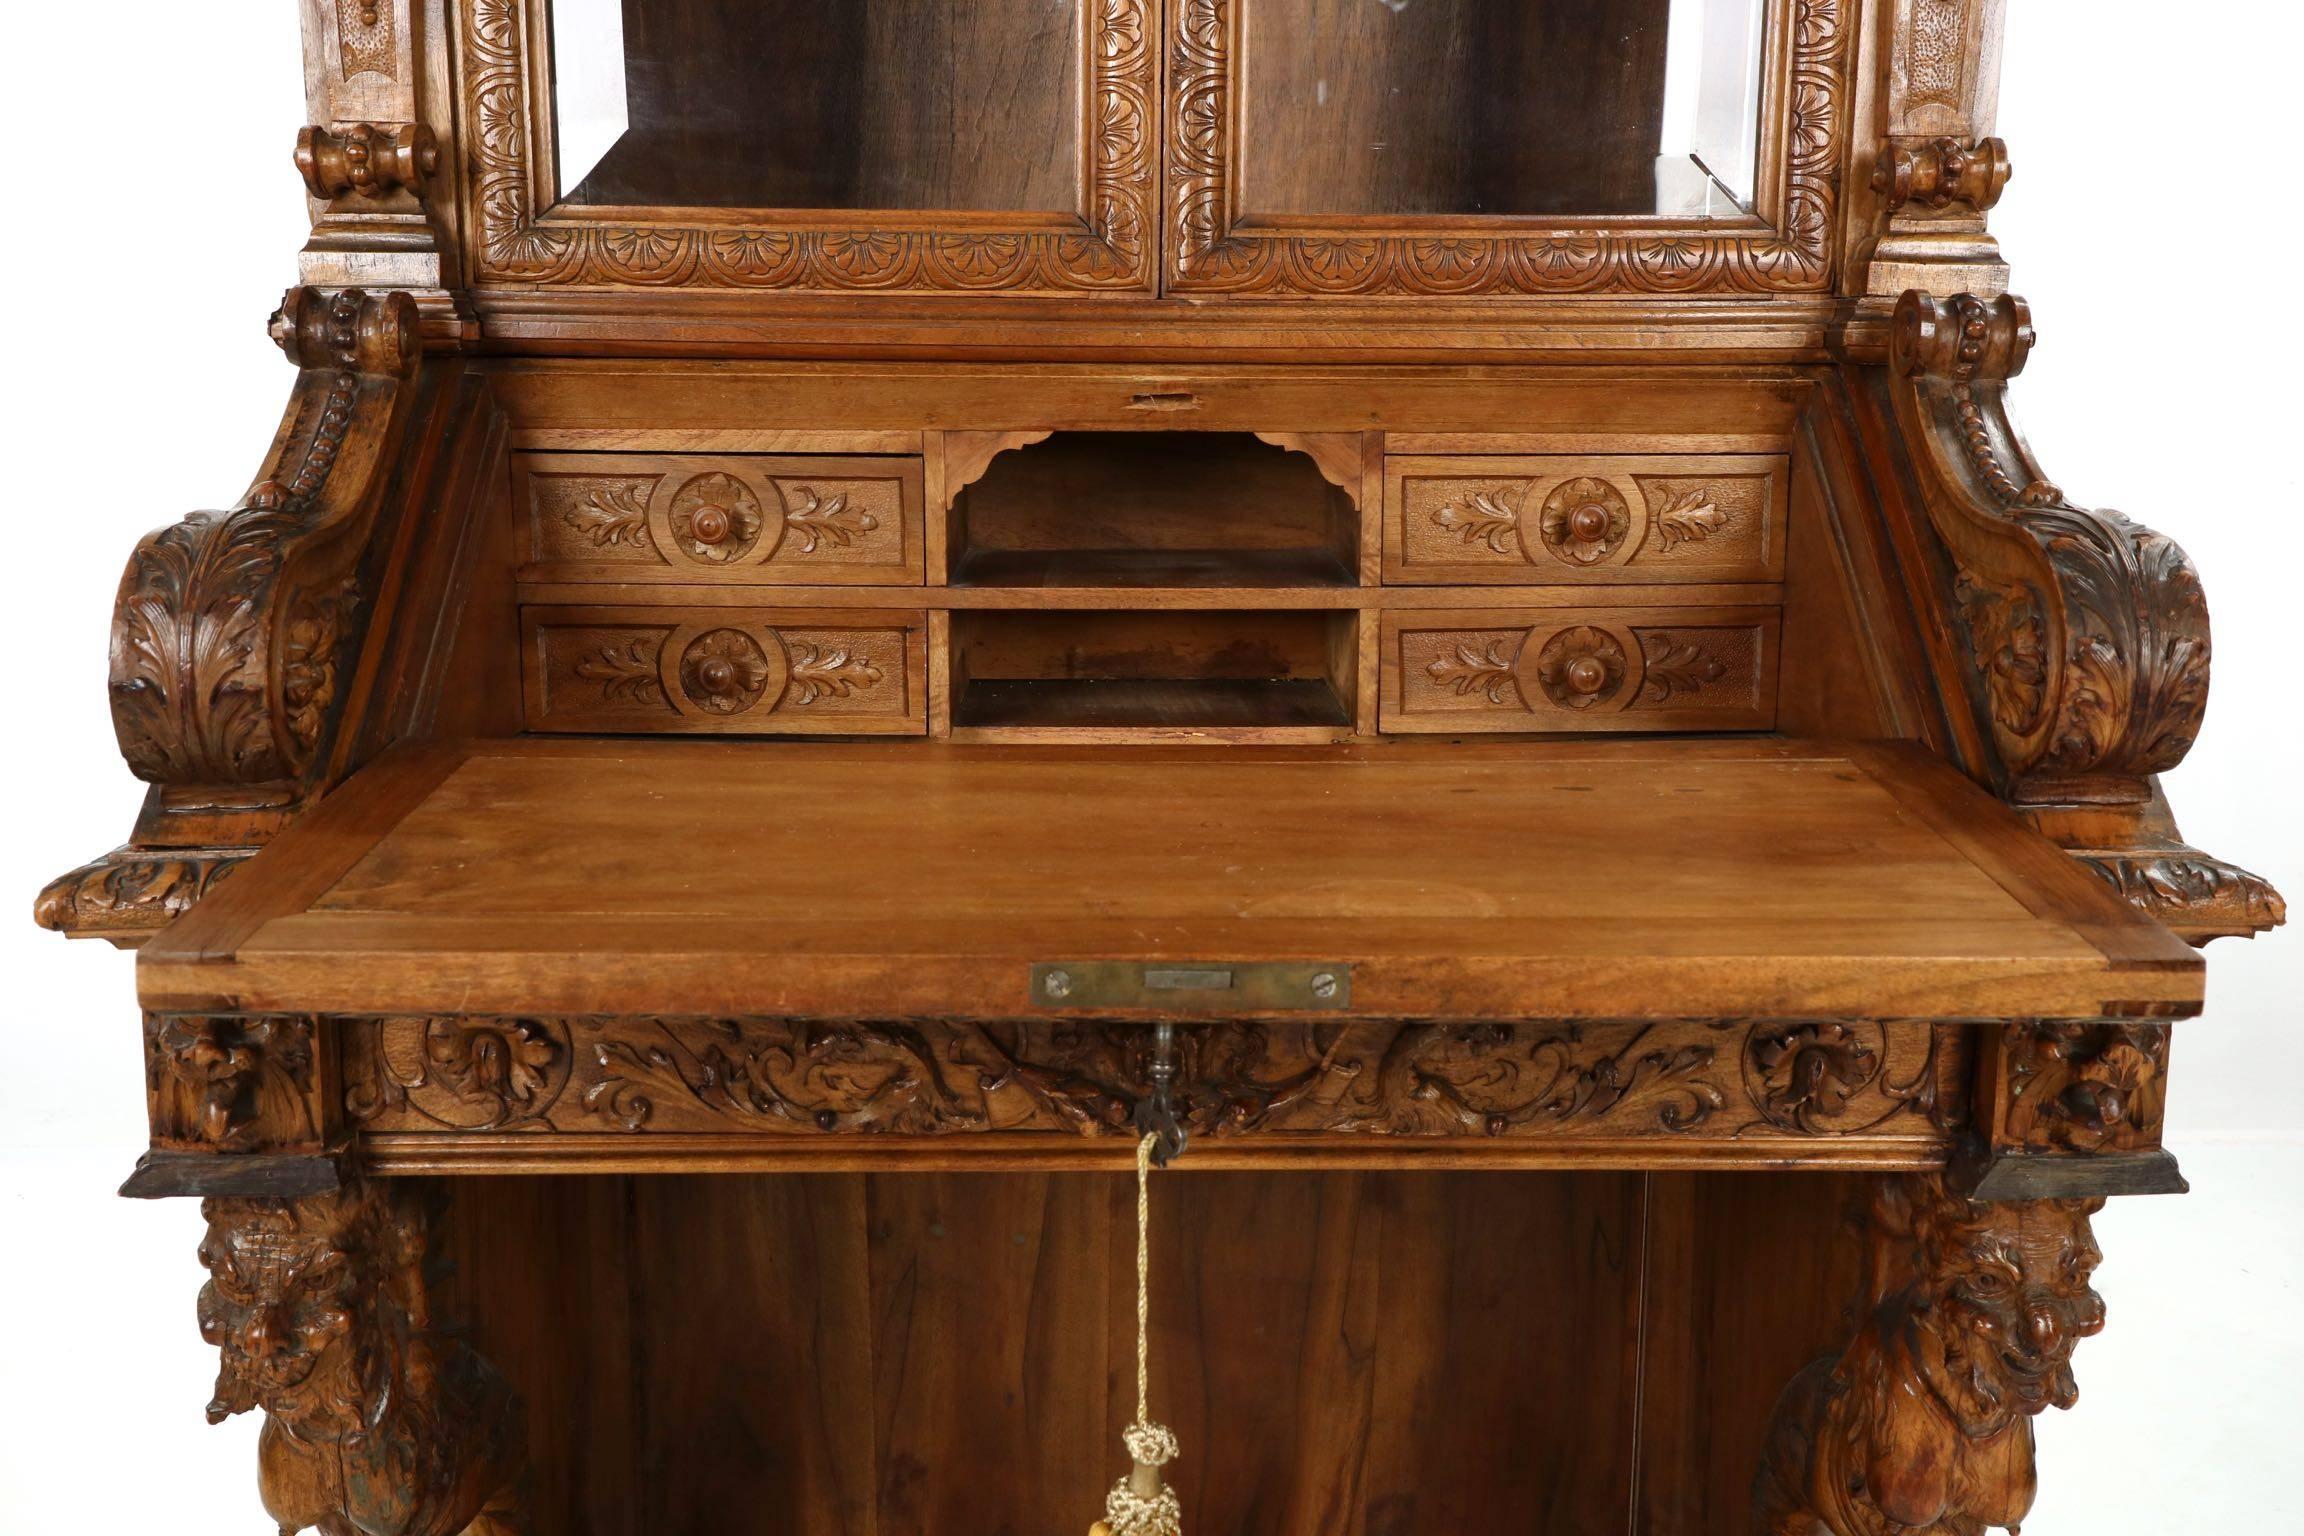 Italian Renaissance Revival Antique Secretary Desk with Bookcase, 19th Century 1